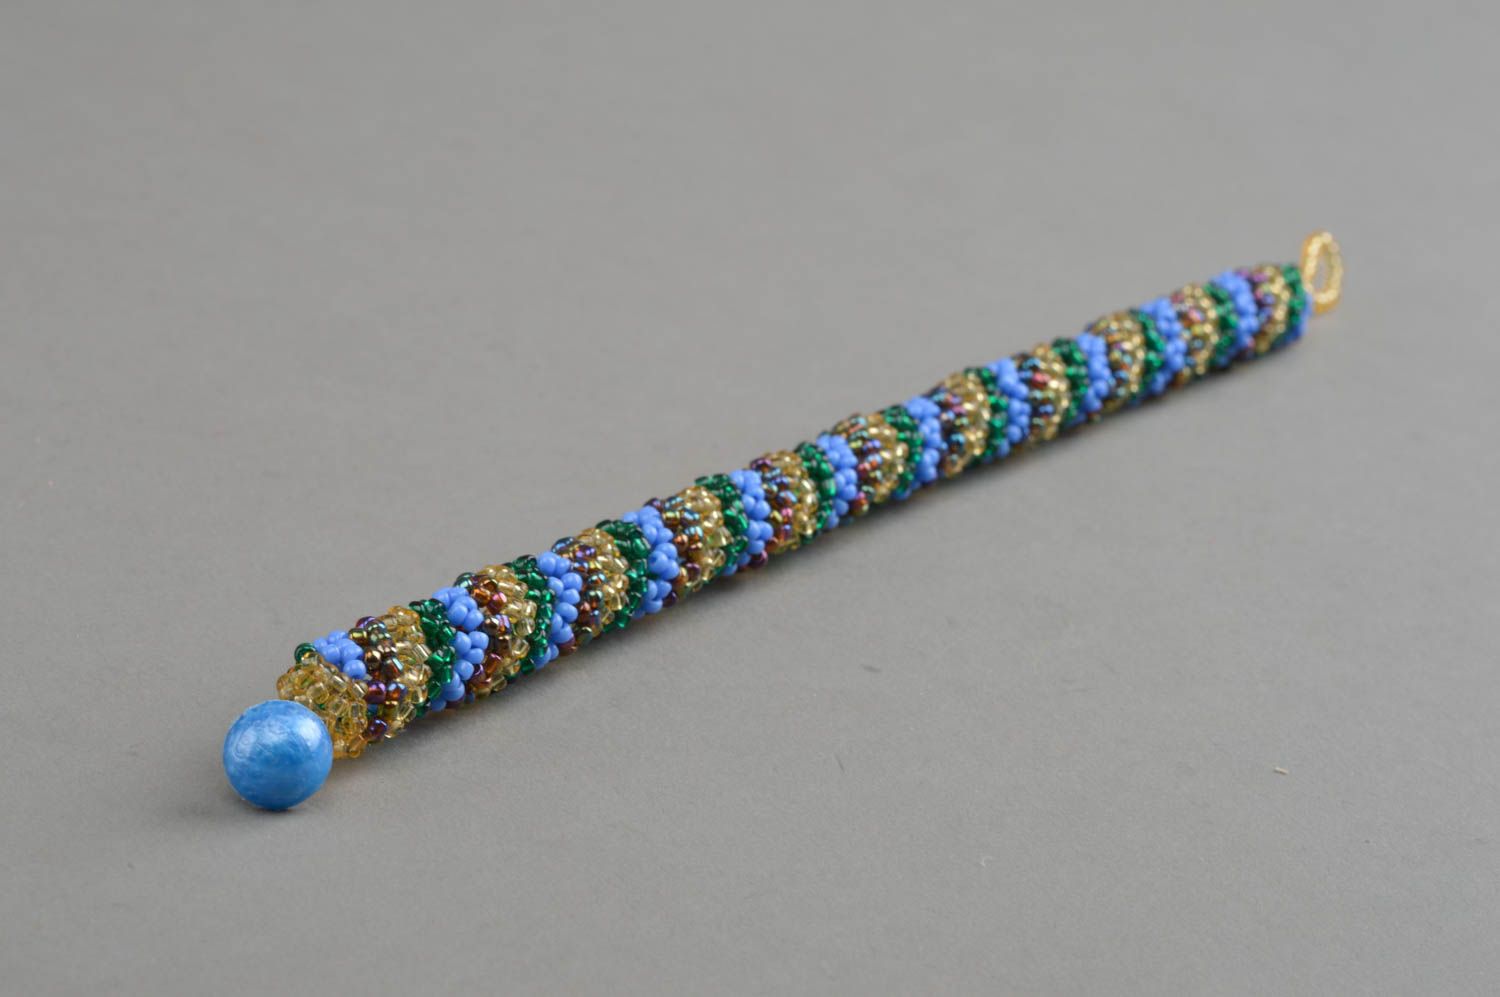 Thin colorful bracelet wrist handmade accessory unusual stylish jewelry photo 3